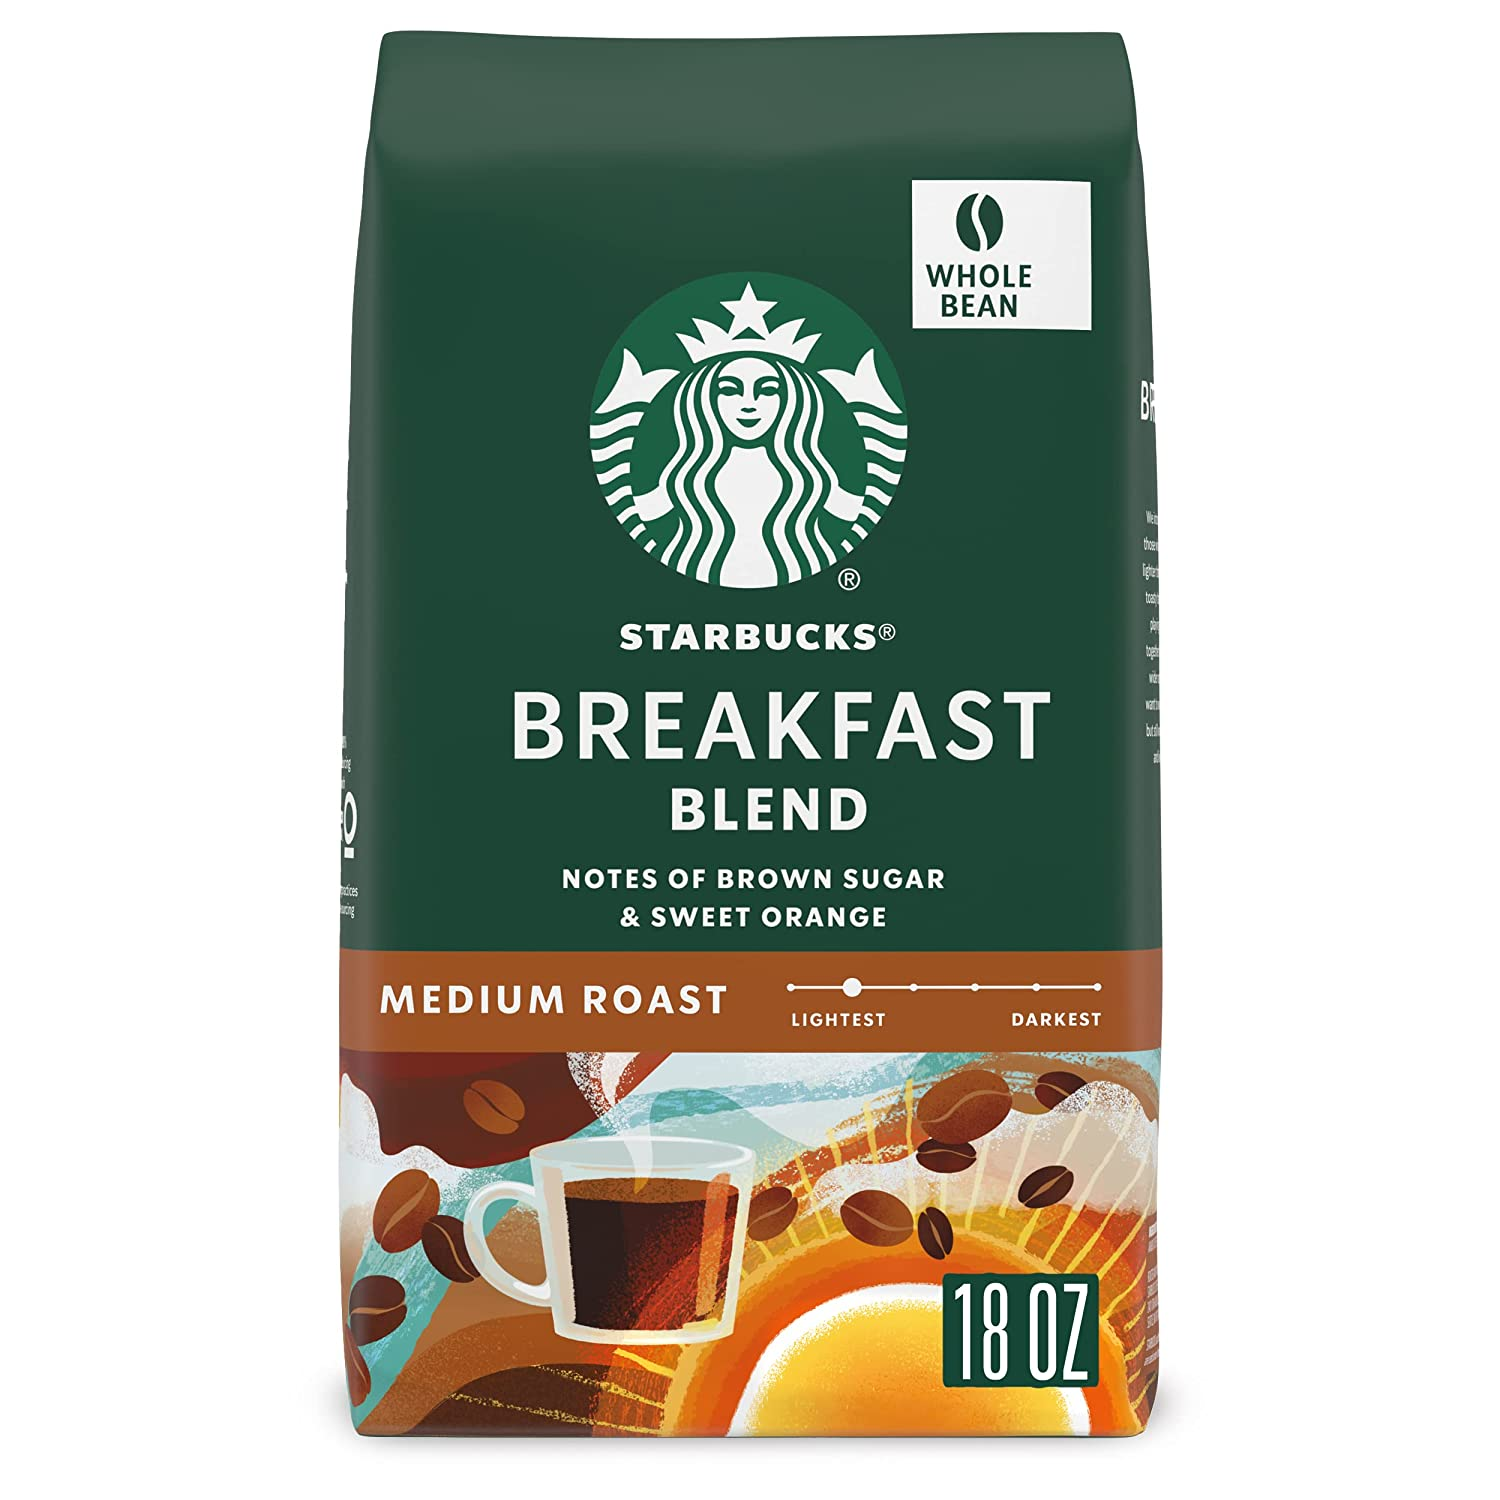 STARBUCKS® Breakfast Blend – Whole Bean Coffee 18oz $8.07